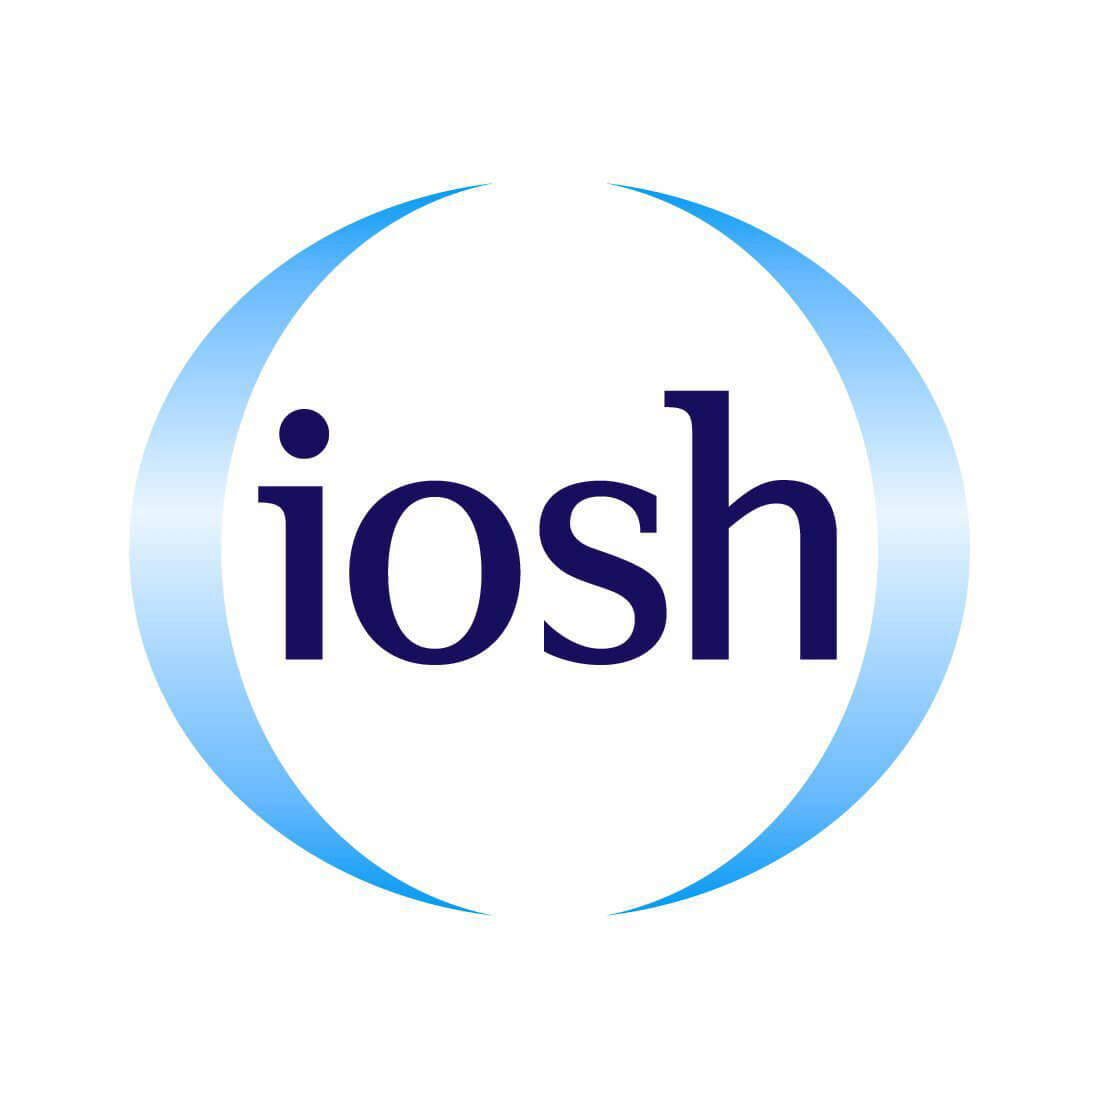 IOSH Certification